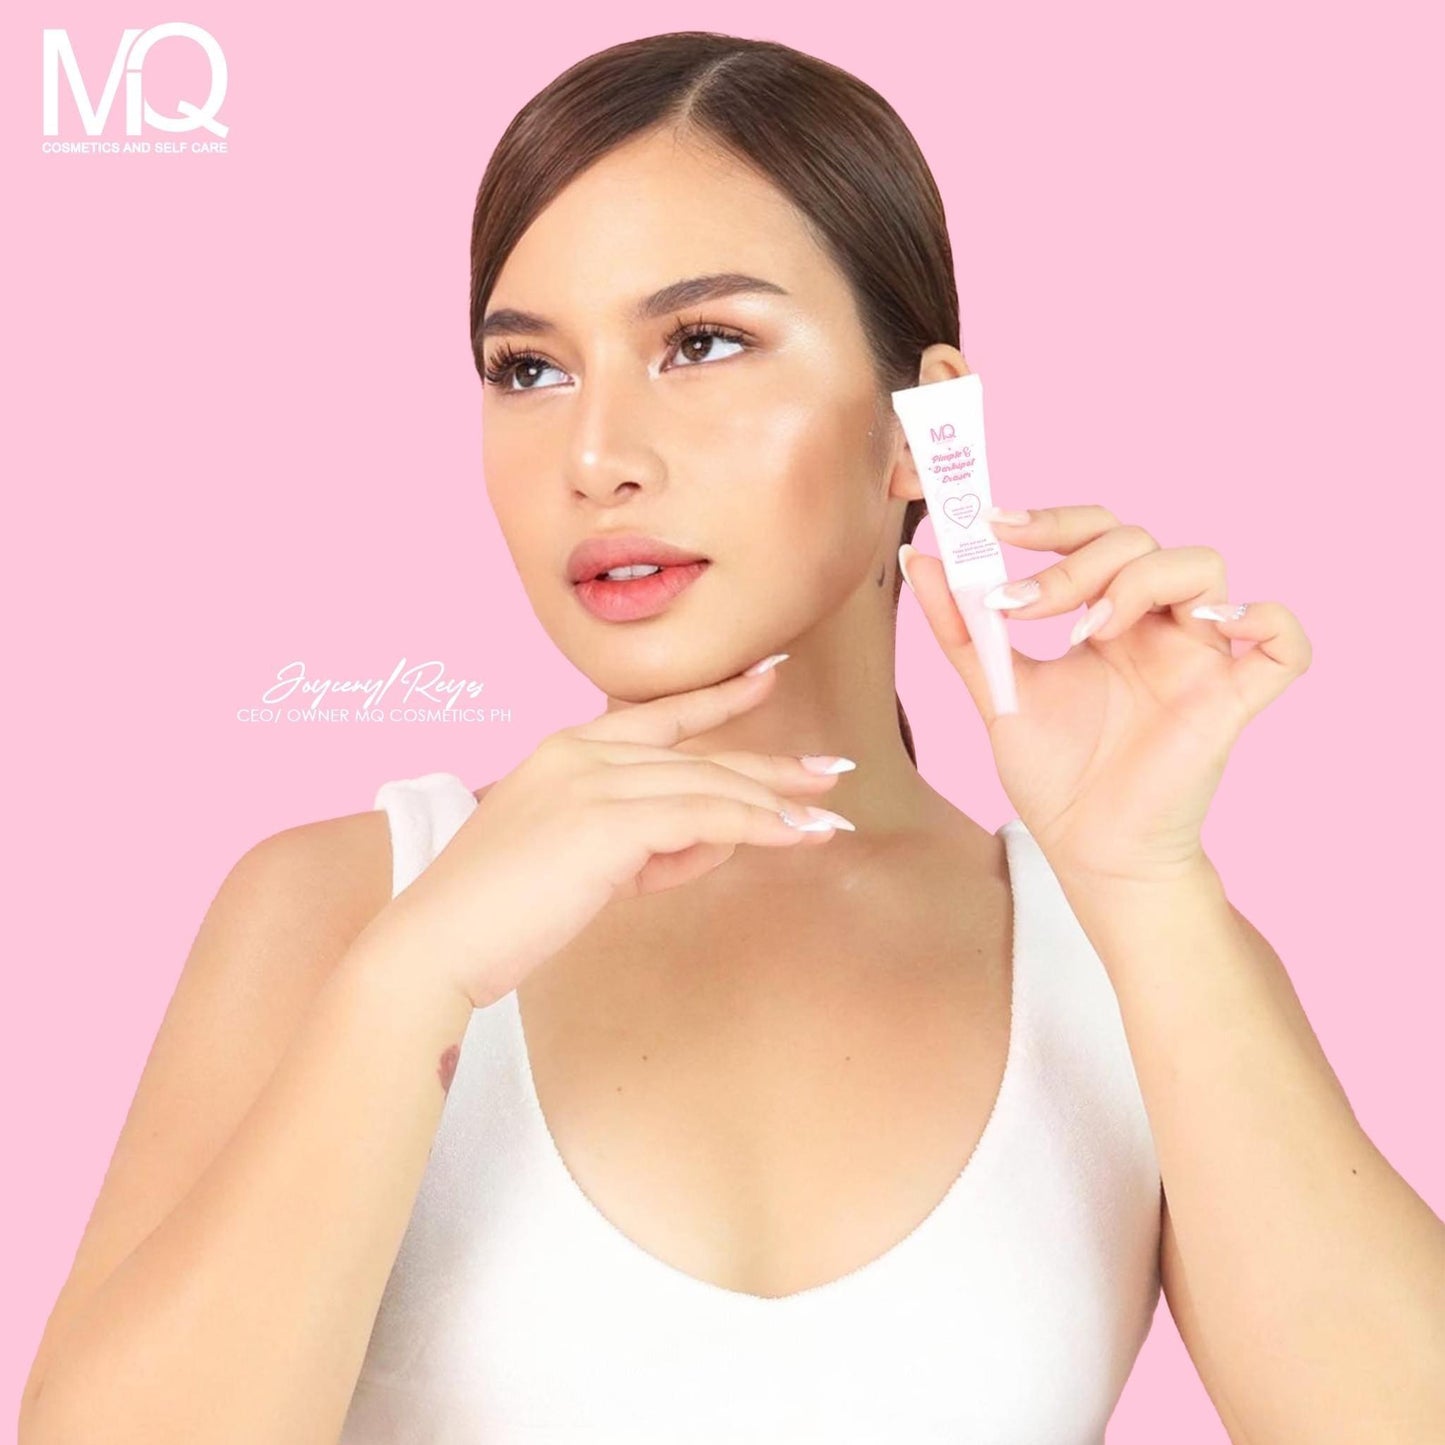 MQ Cosmetics Pimple & Dark Spot Eraser - Astrid & Rose